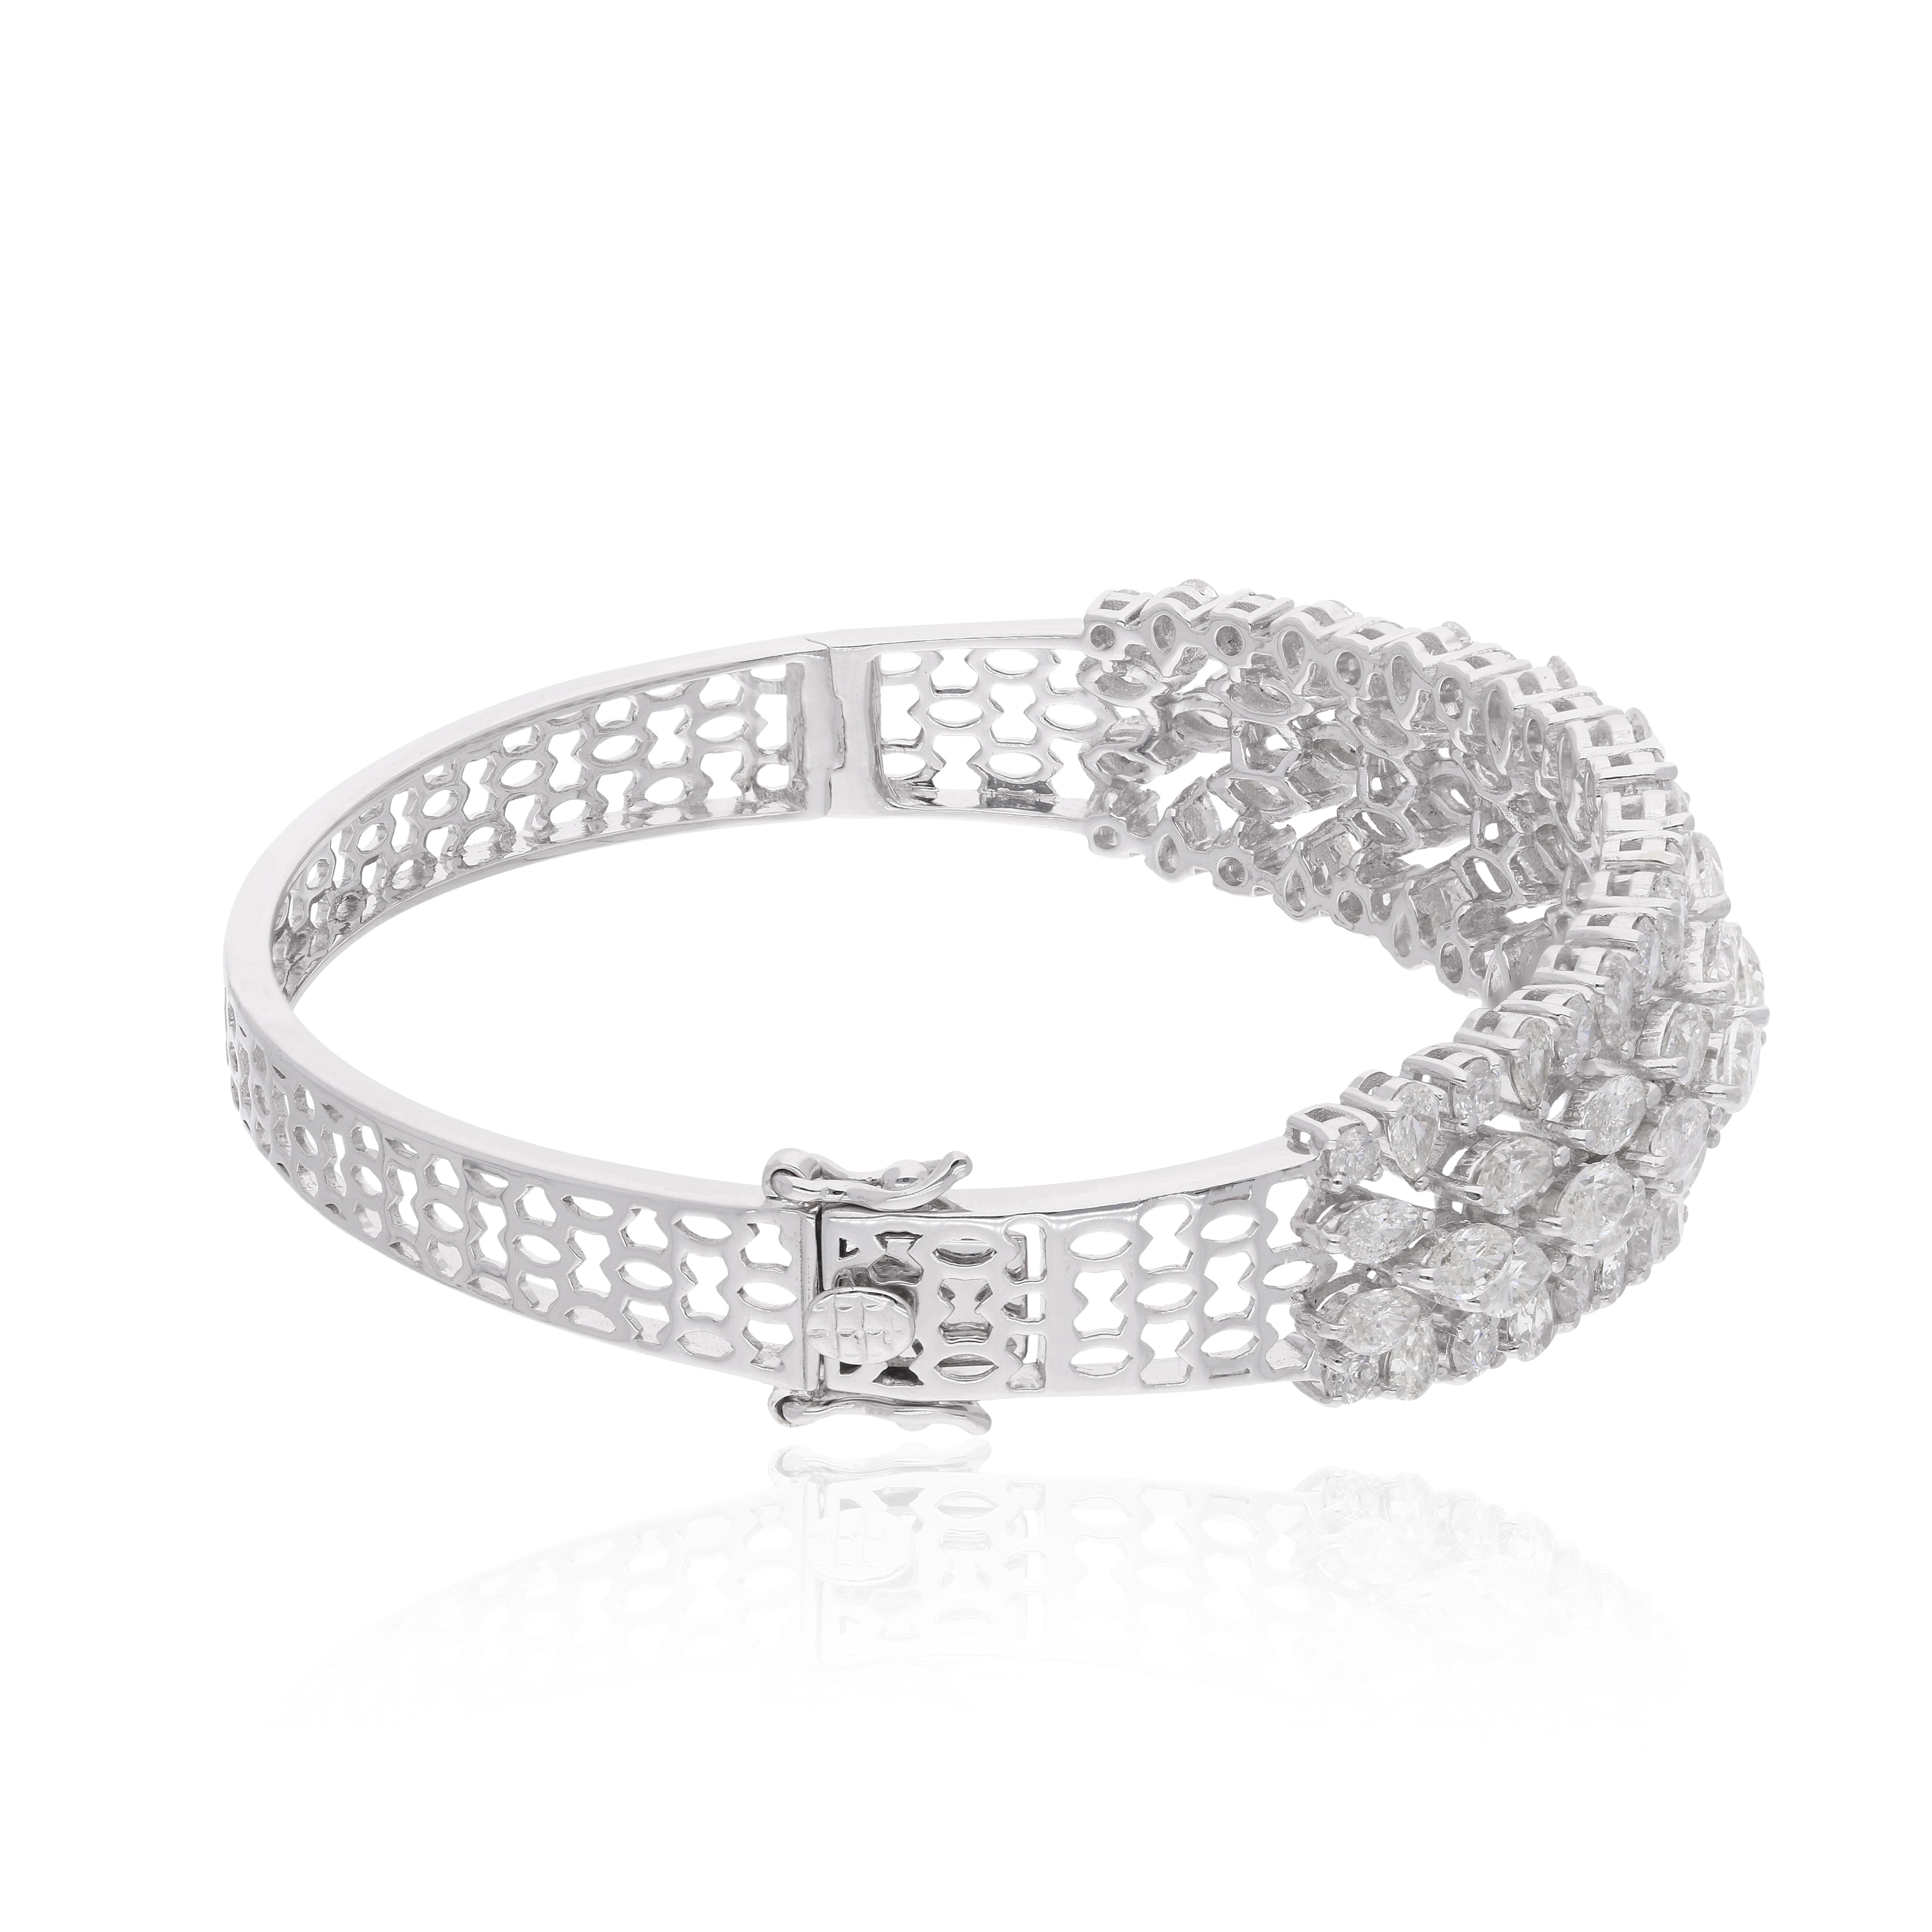 Marquise & Pear Diamond Bangle Bracelet 18 Karat White Gold Handmade Jewelry For Sale 1